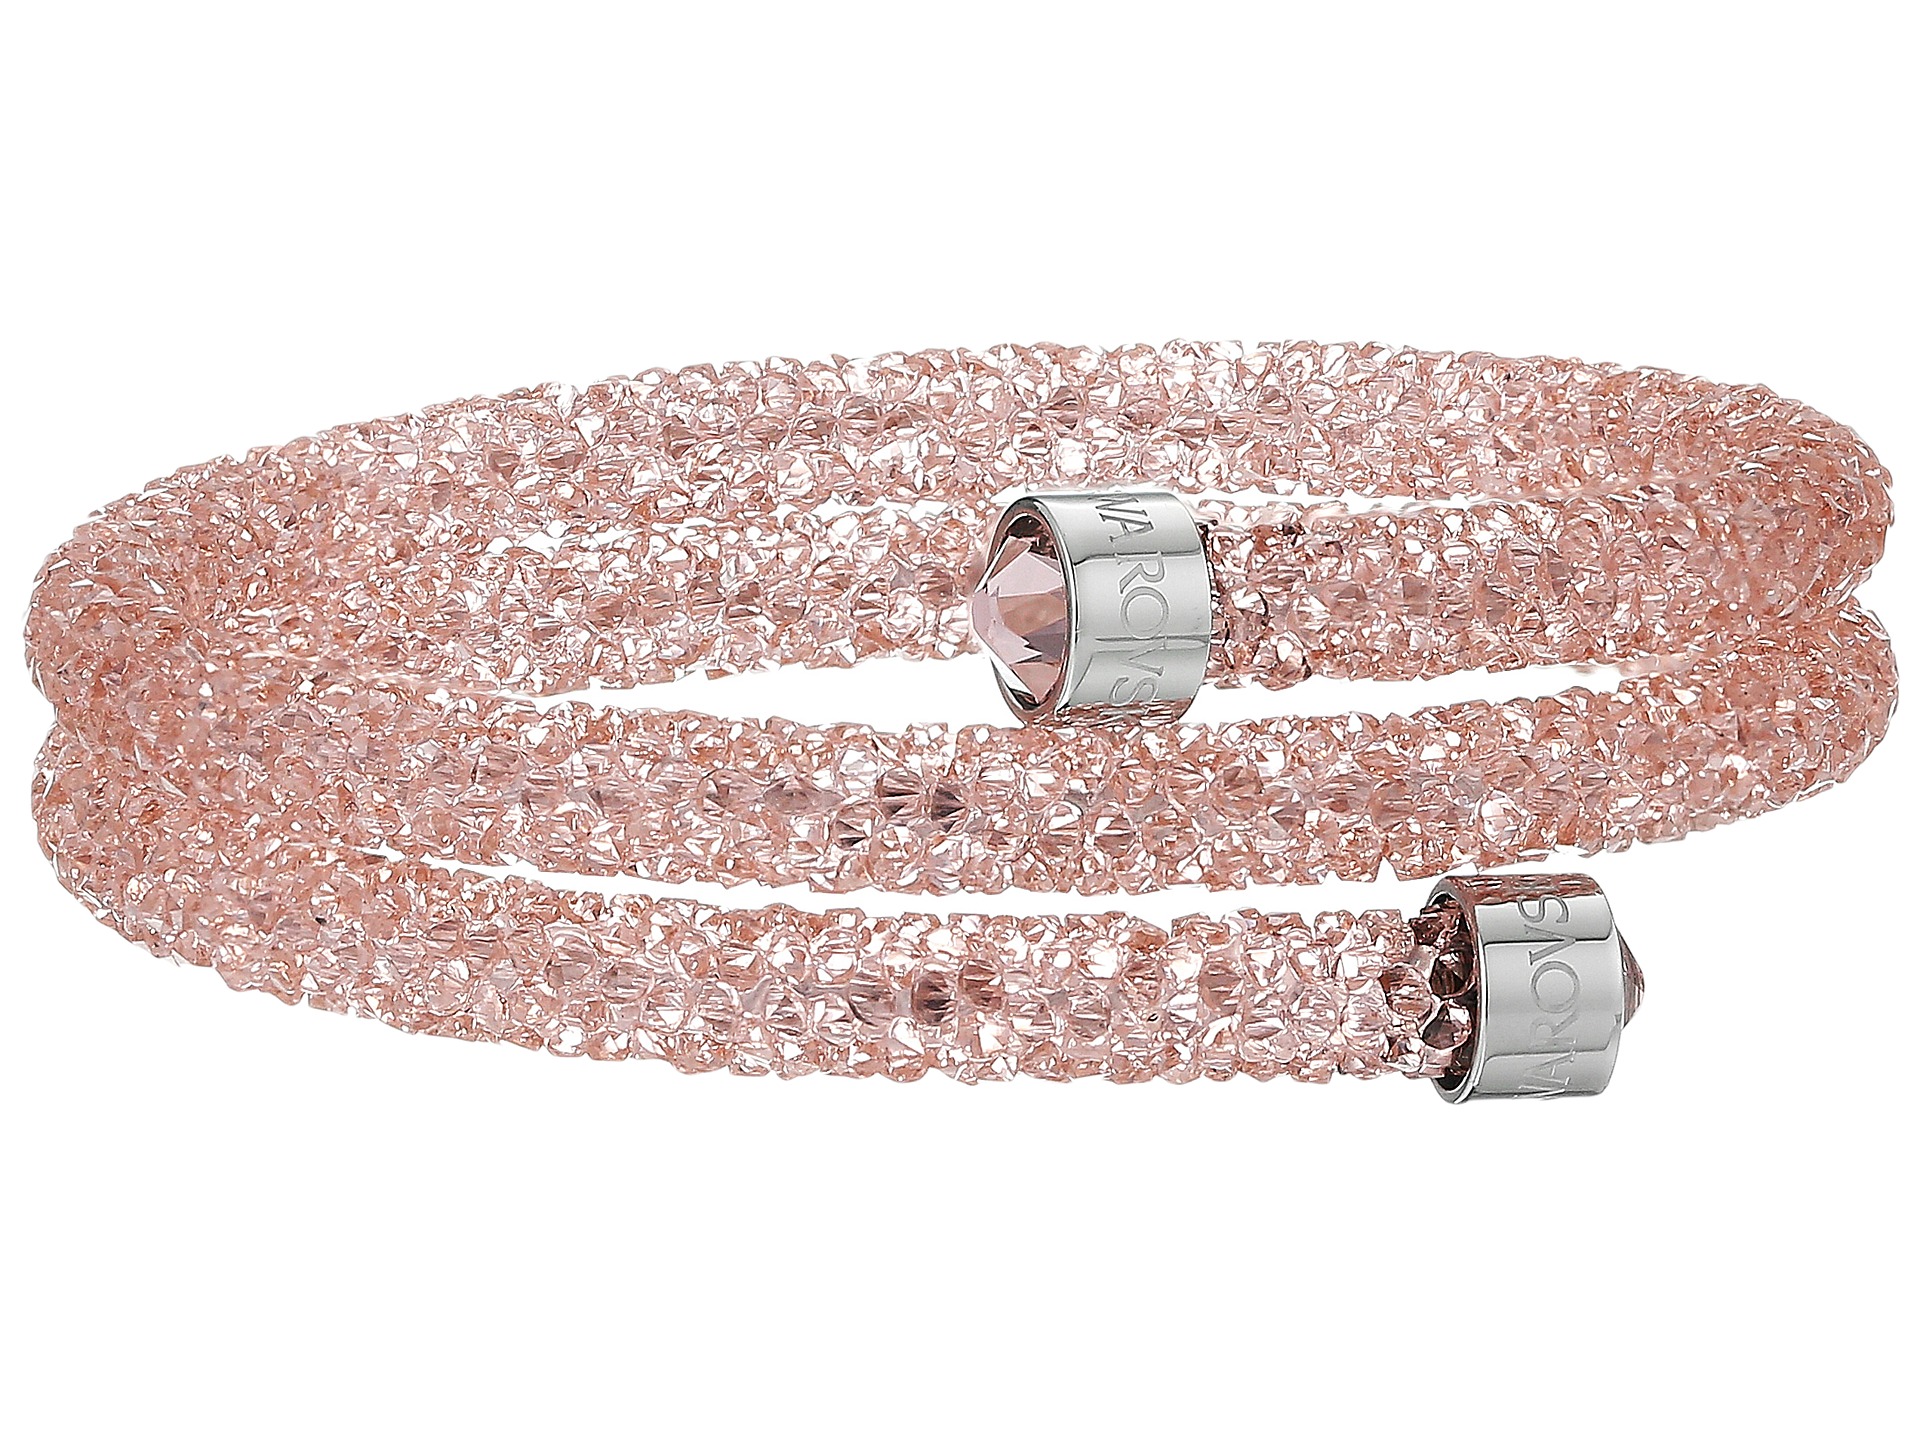 Swarovski Crystaldust Double Bangle Bracelet at Zappos.com